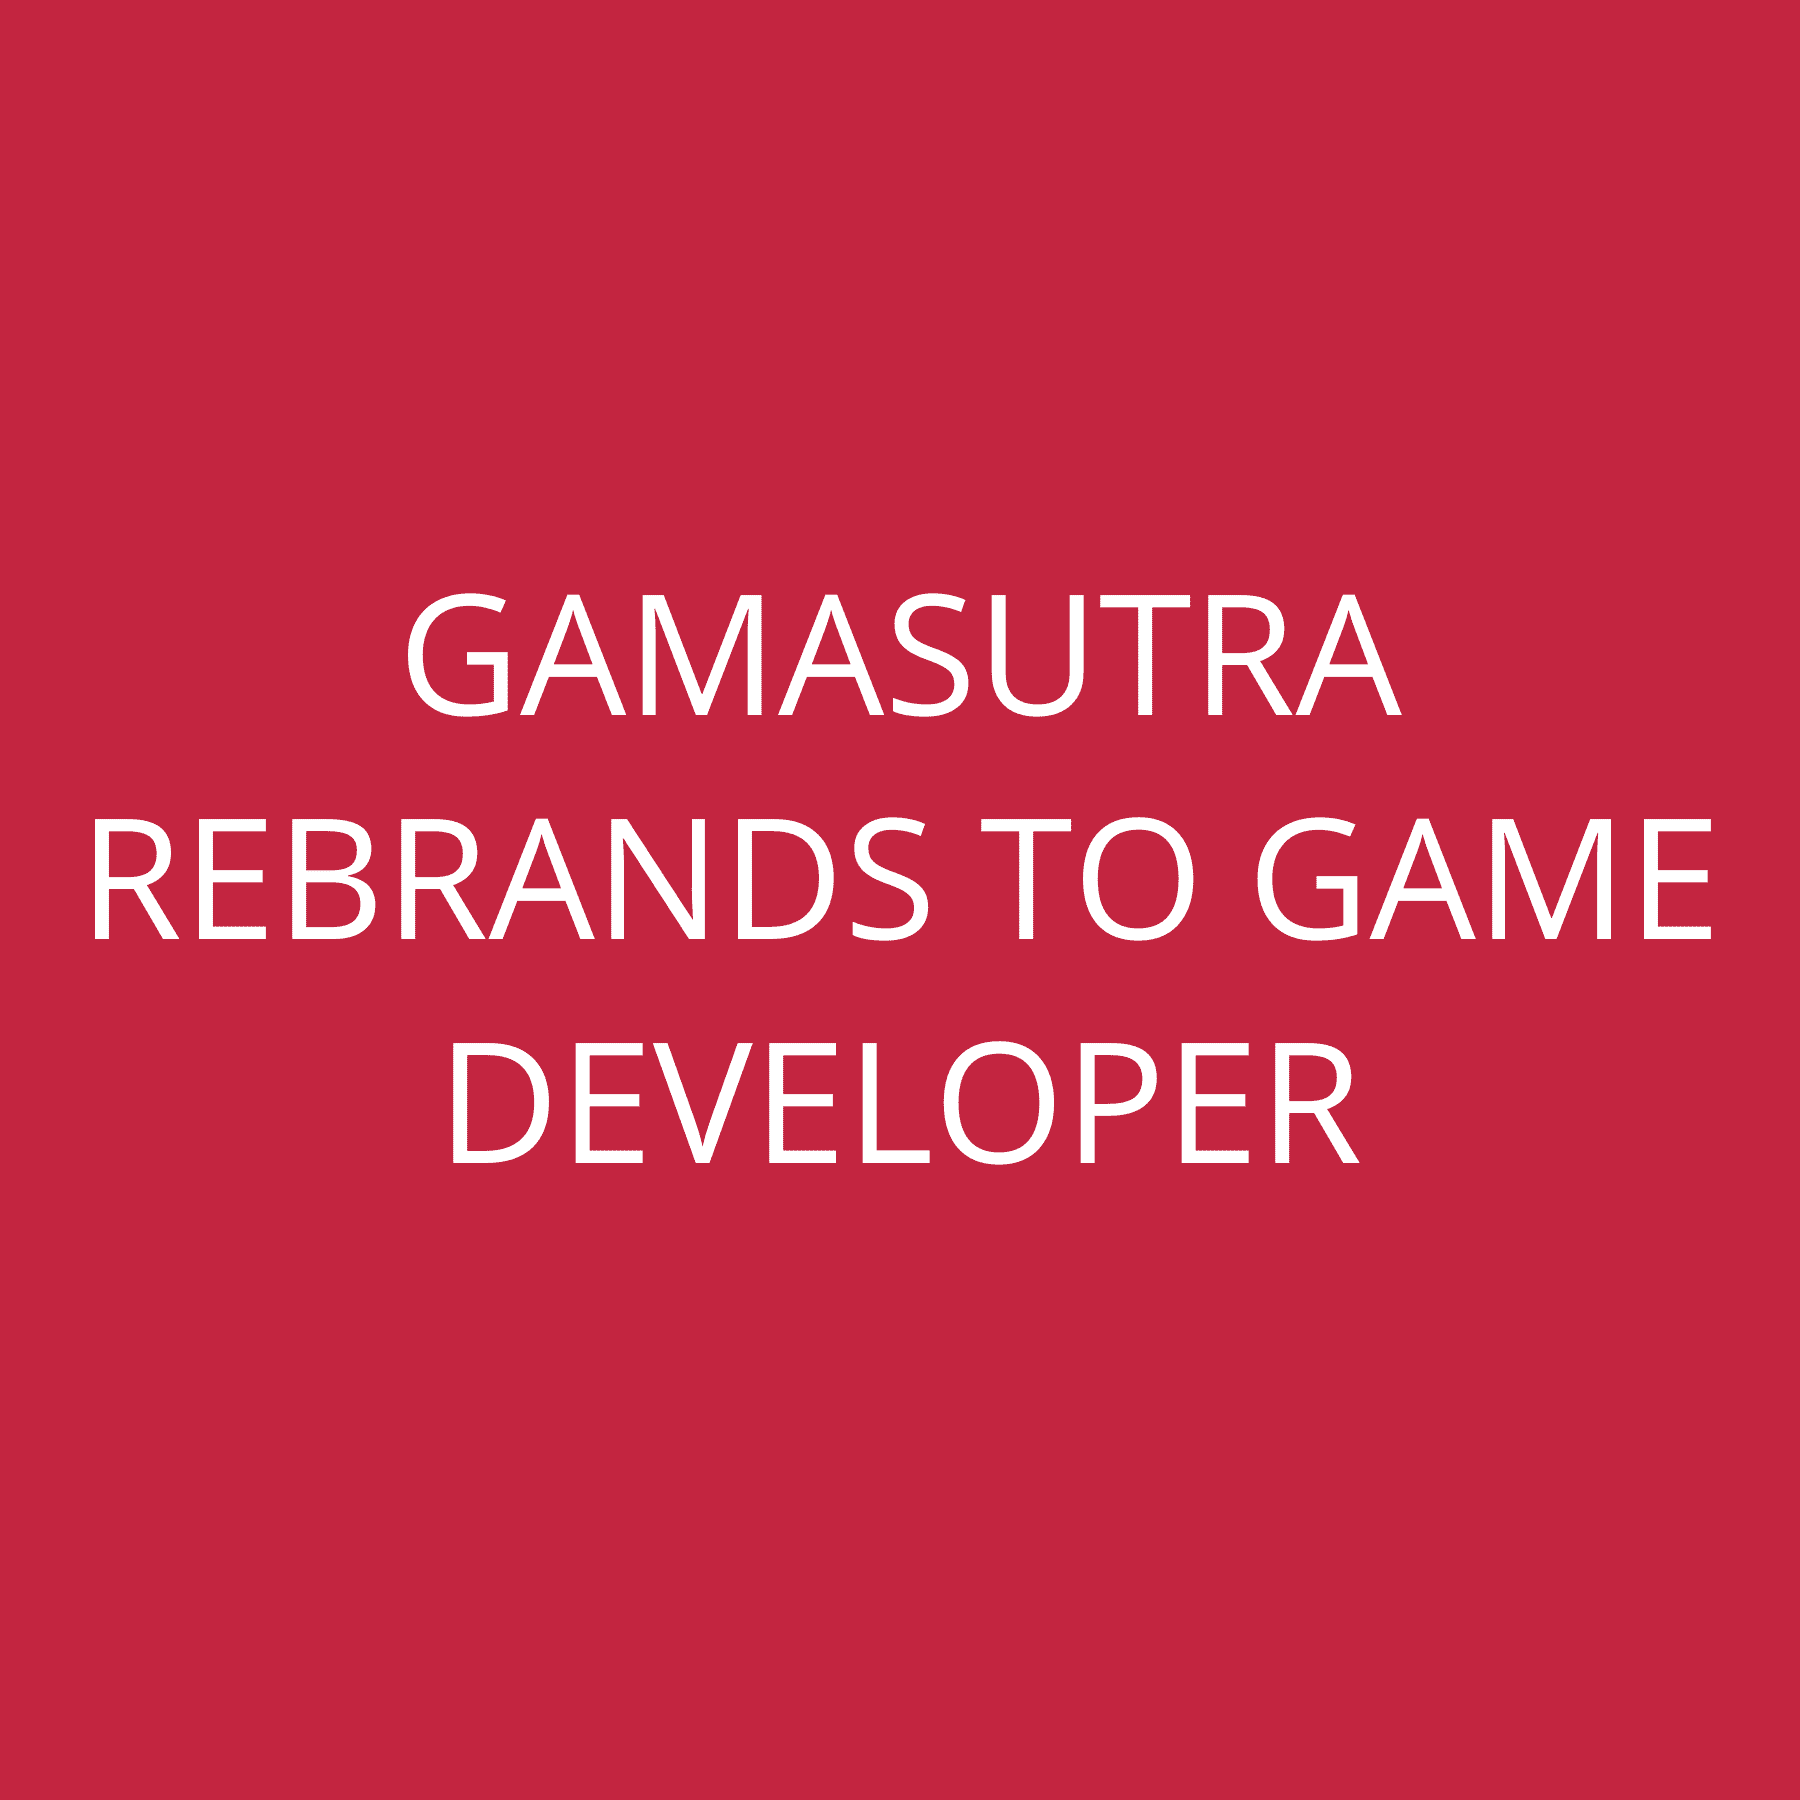 Gamasutra rebrands to Game Developer